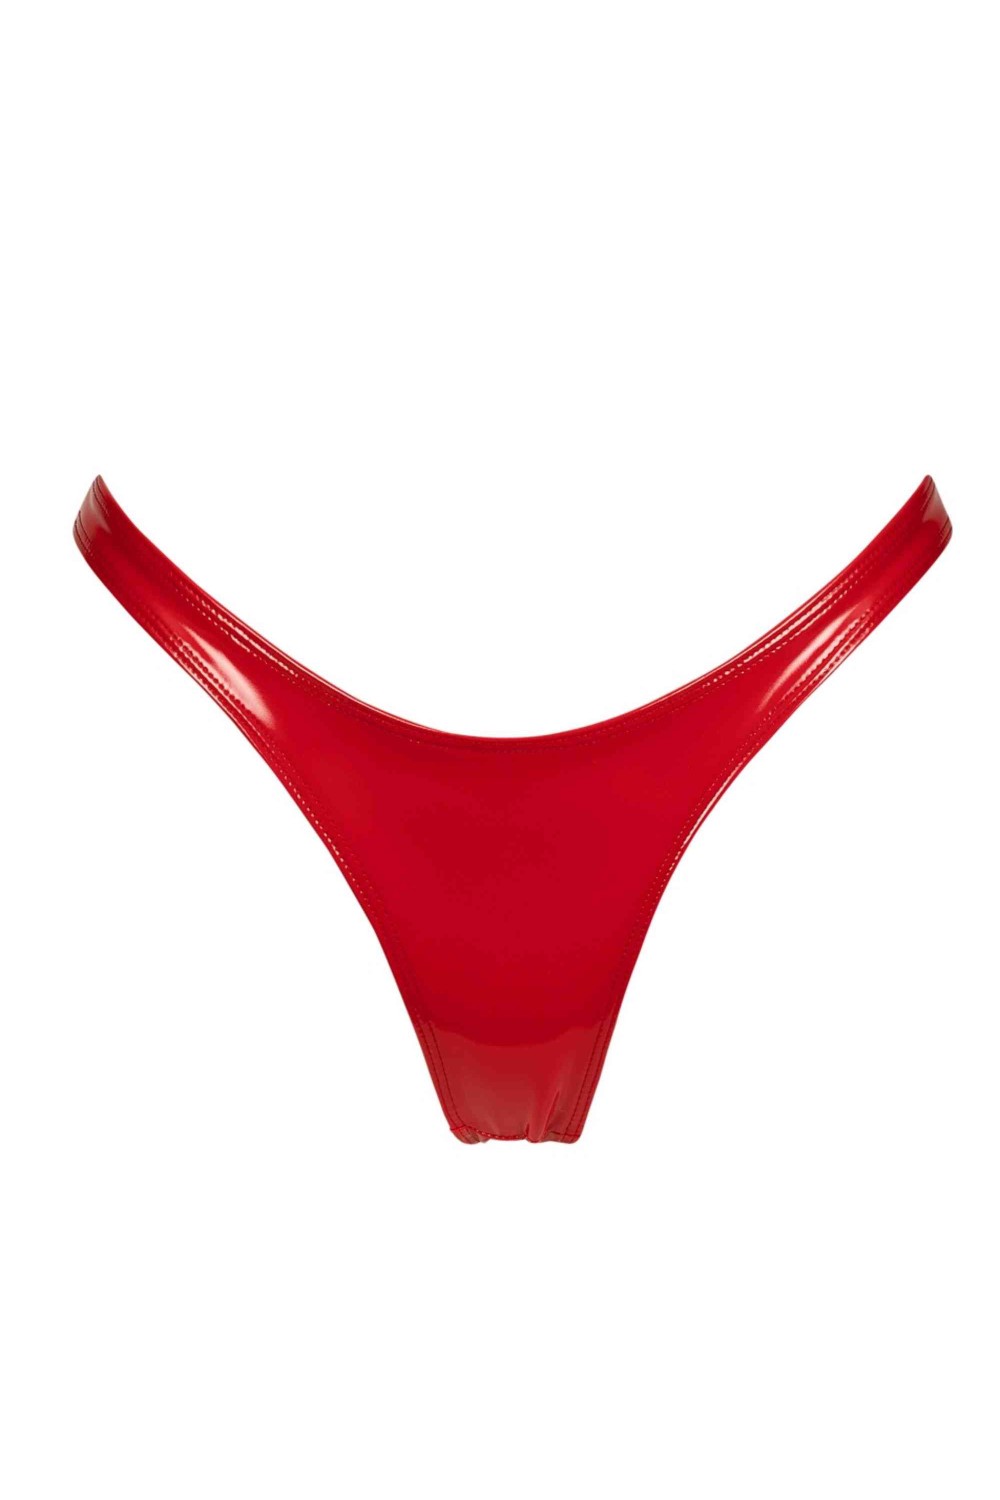 Nao, vinyl & red mesh fetish bra - Patrice Catanzaro Official Website